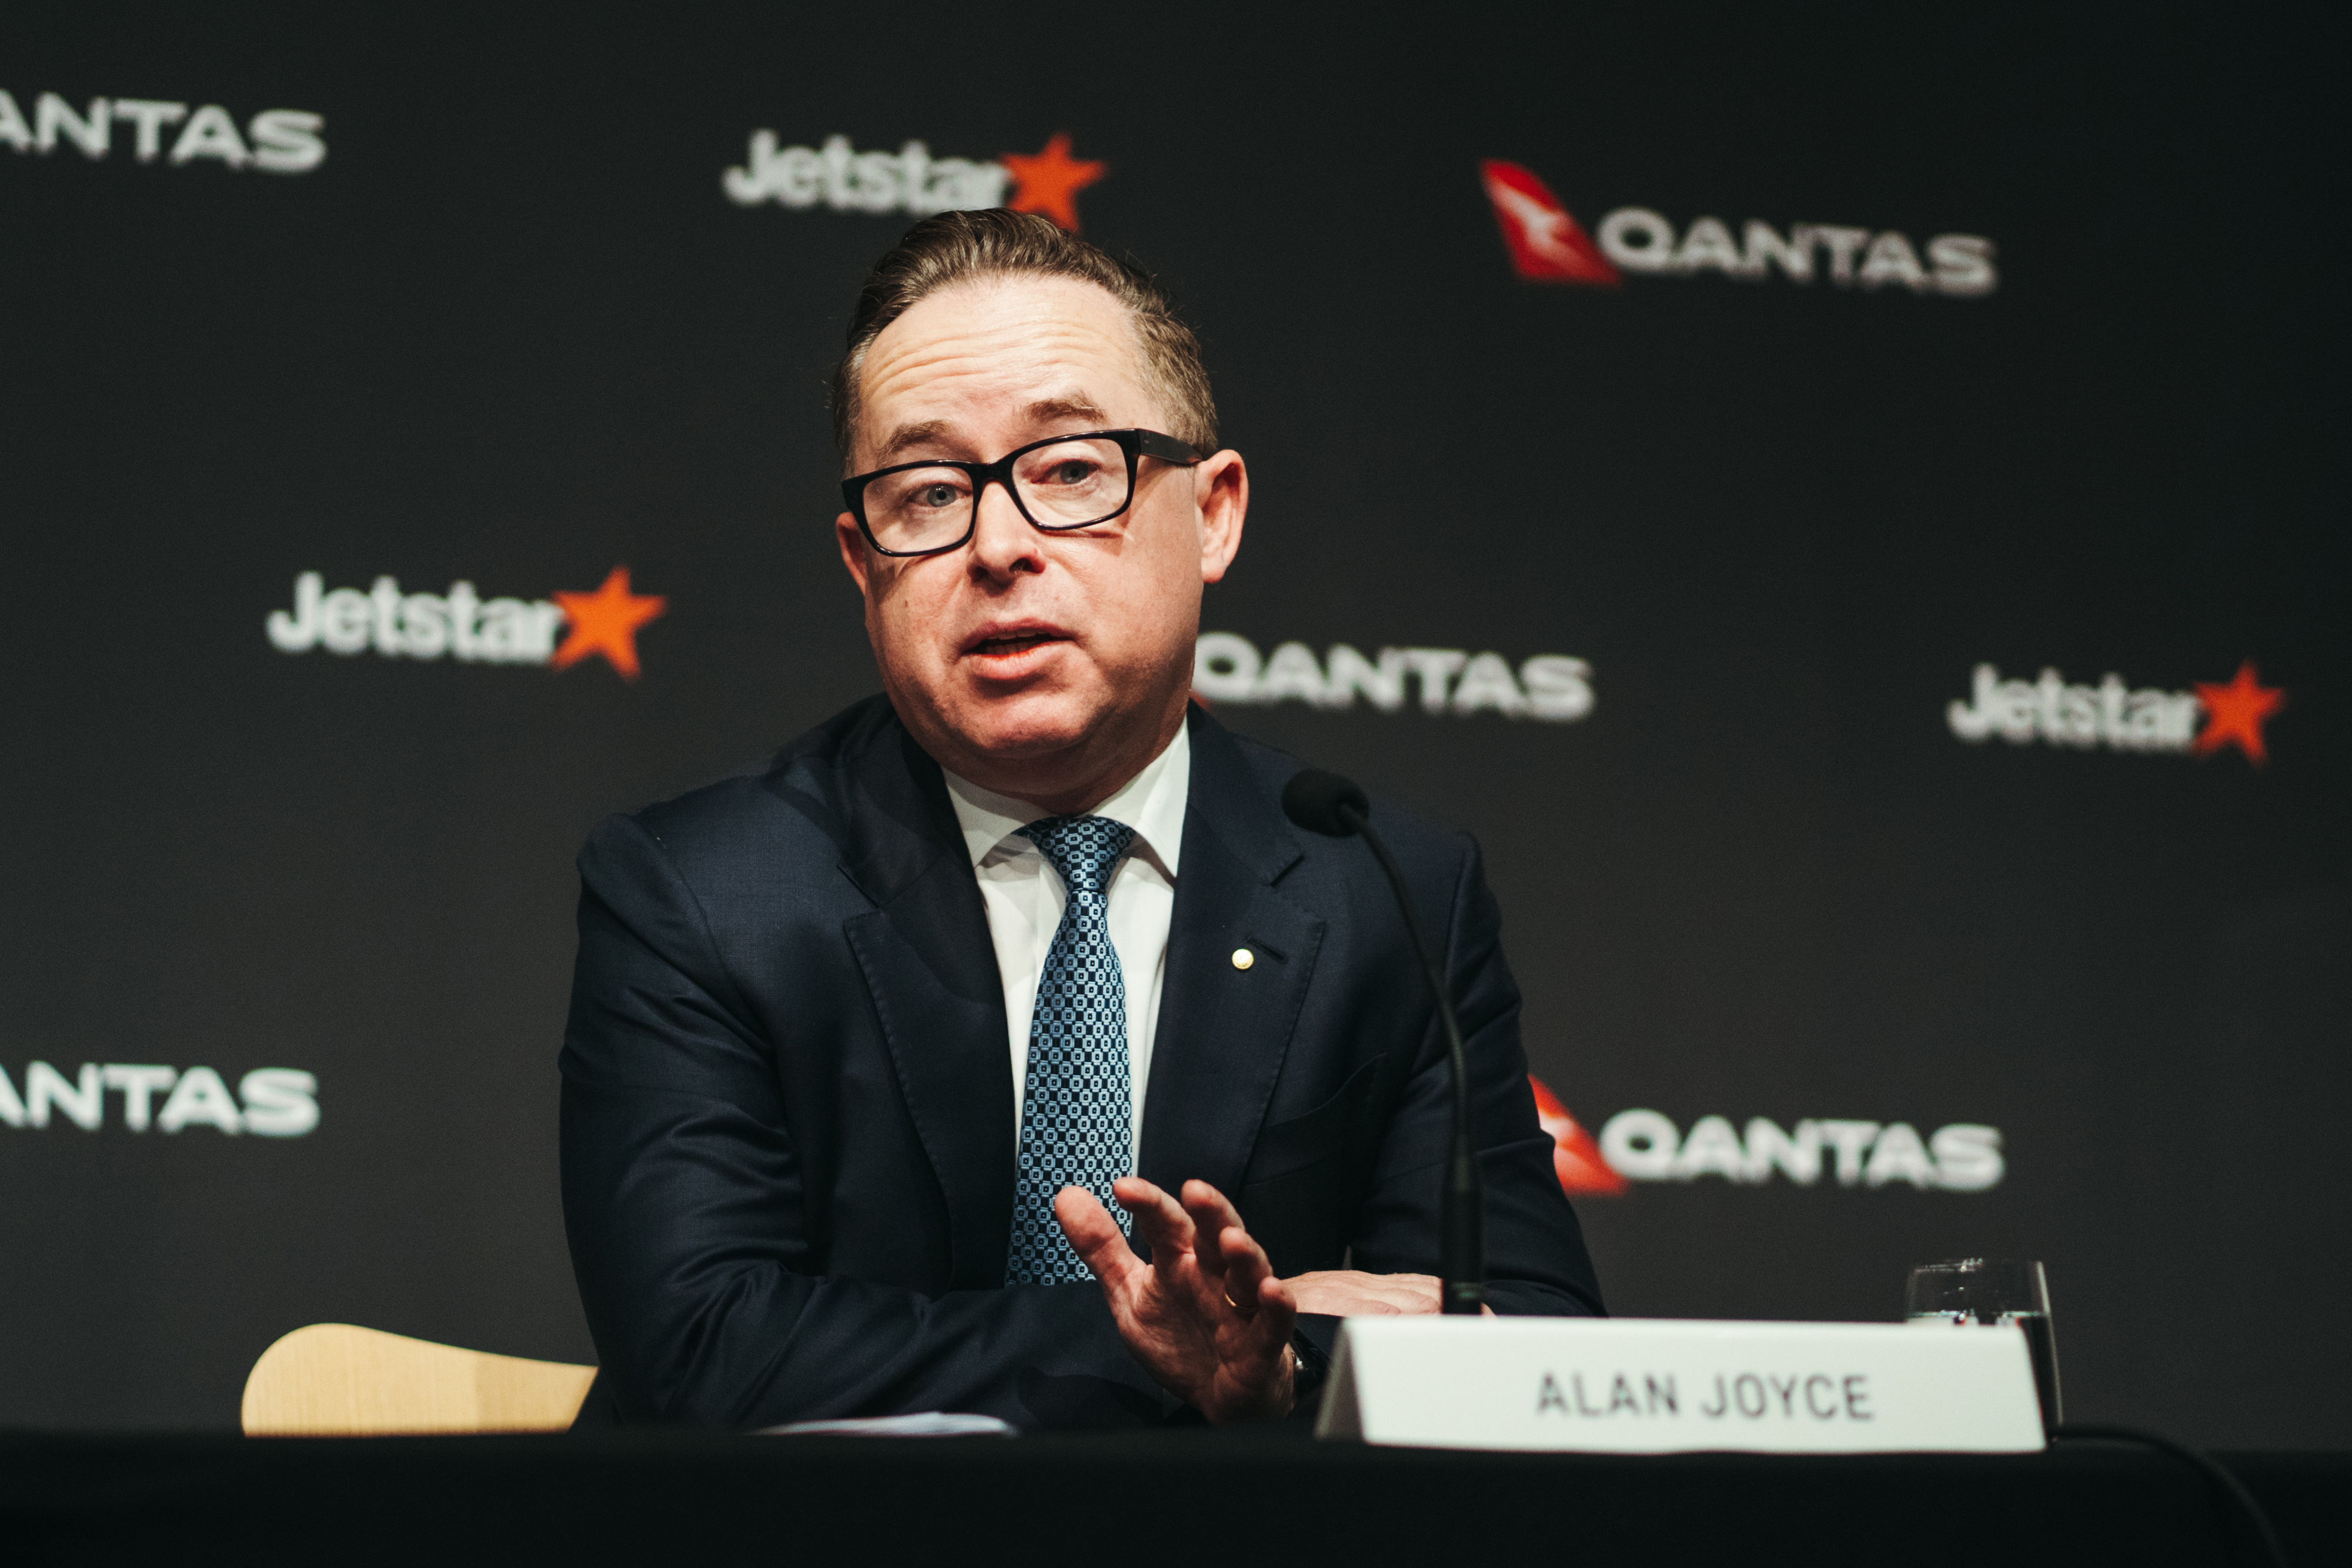 Former Qantas Group CEO Alan Joyce